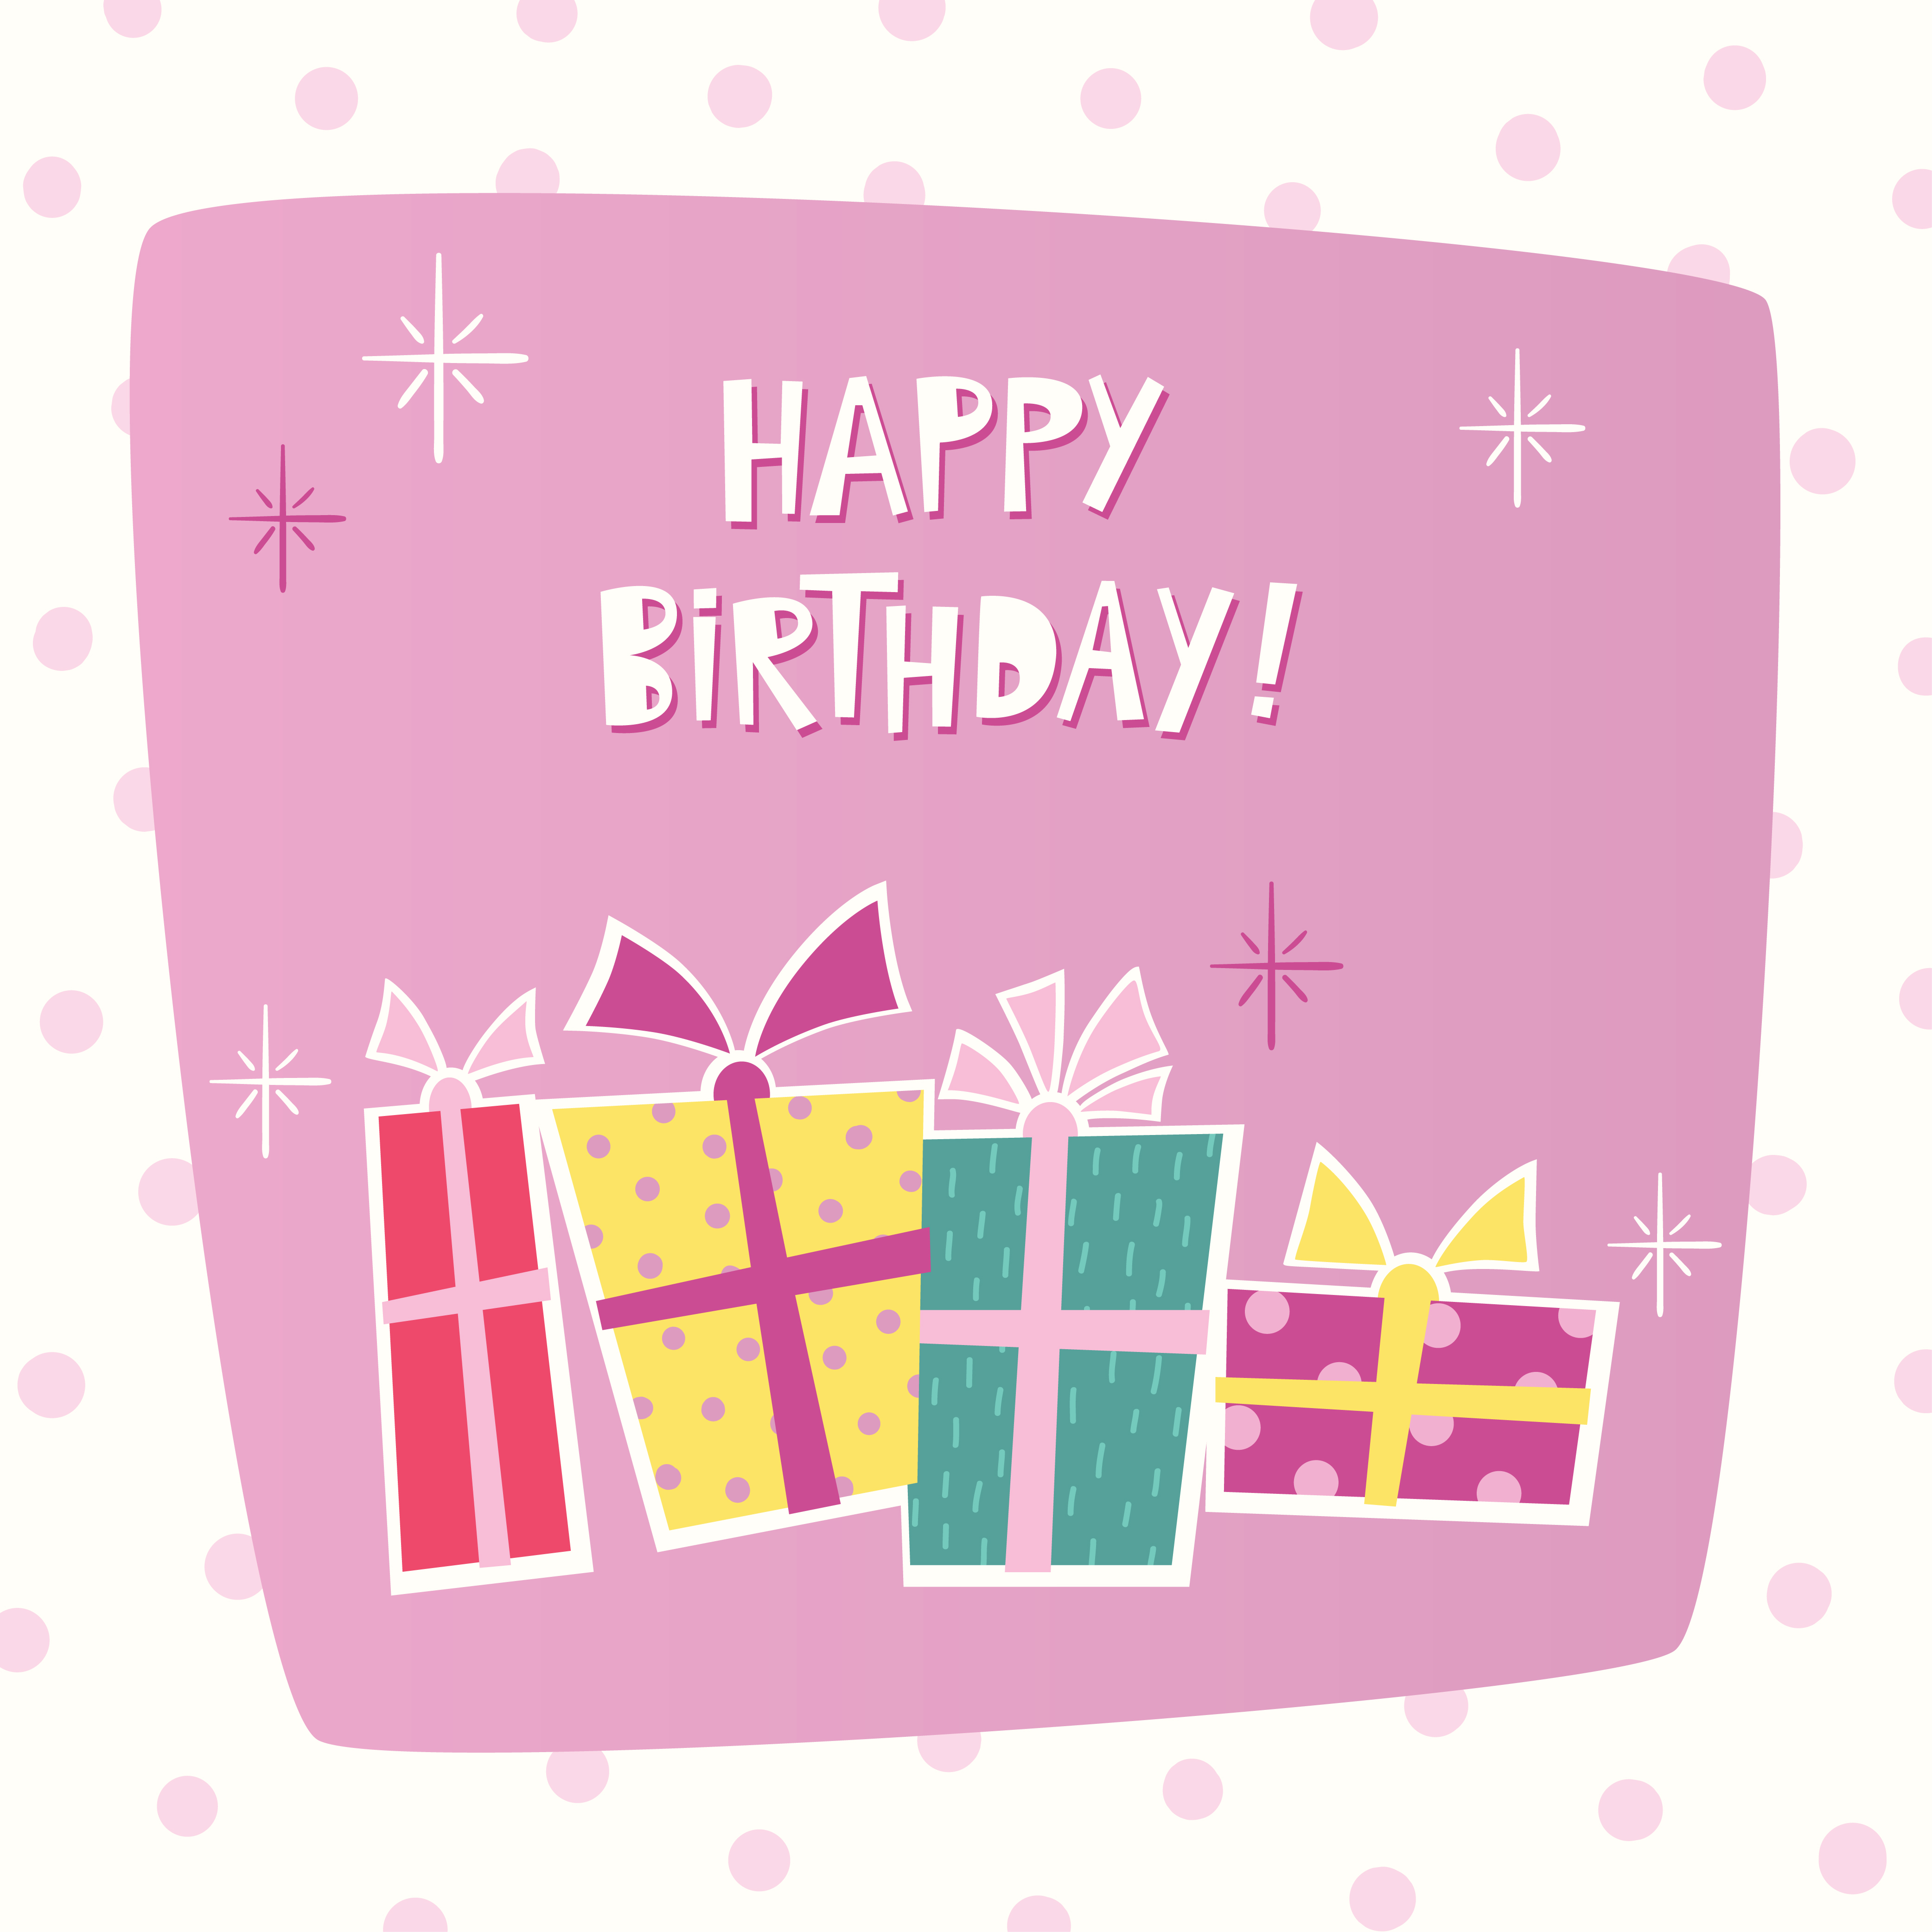 Happy Birthday card Photoshop brush